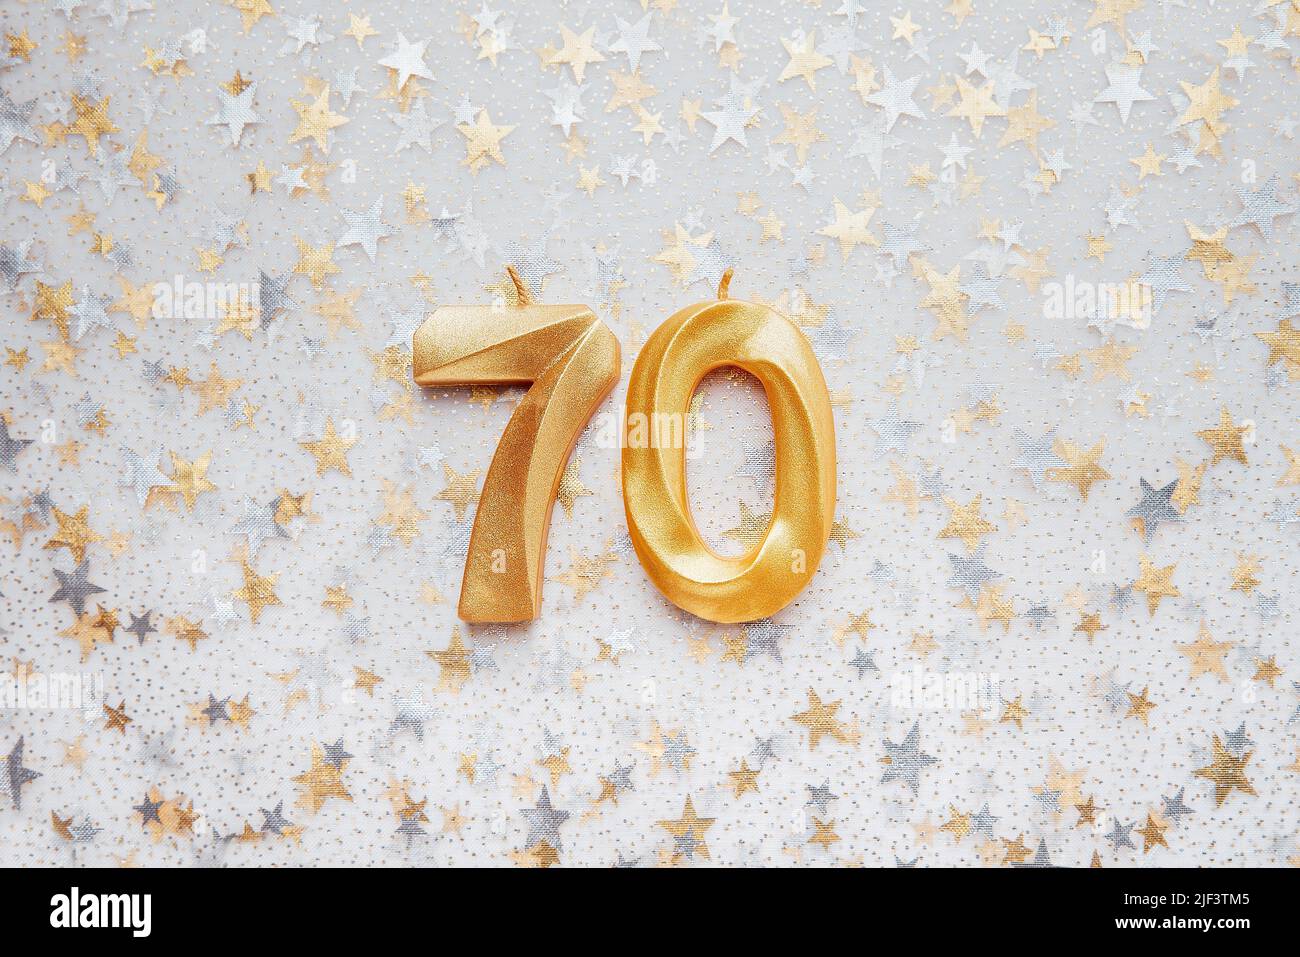 Number 70 seventy golden celebration birthday candle on Festive Background. seventy years birthday. concept of celebrating birthday, anniversary, important date, holiday Stock Photo